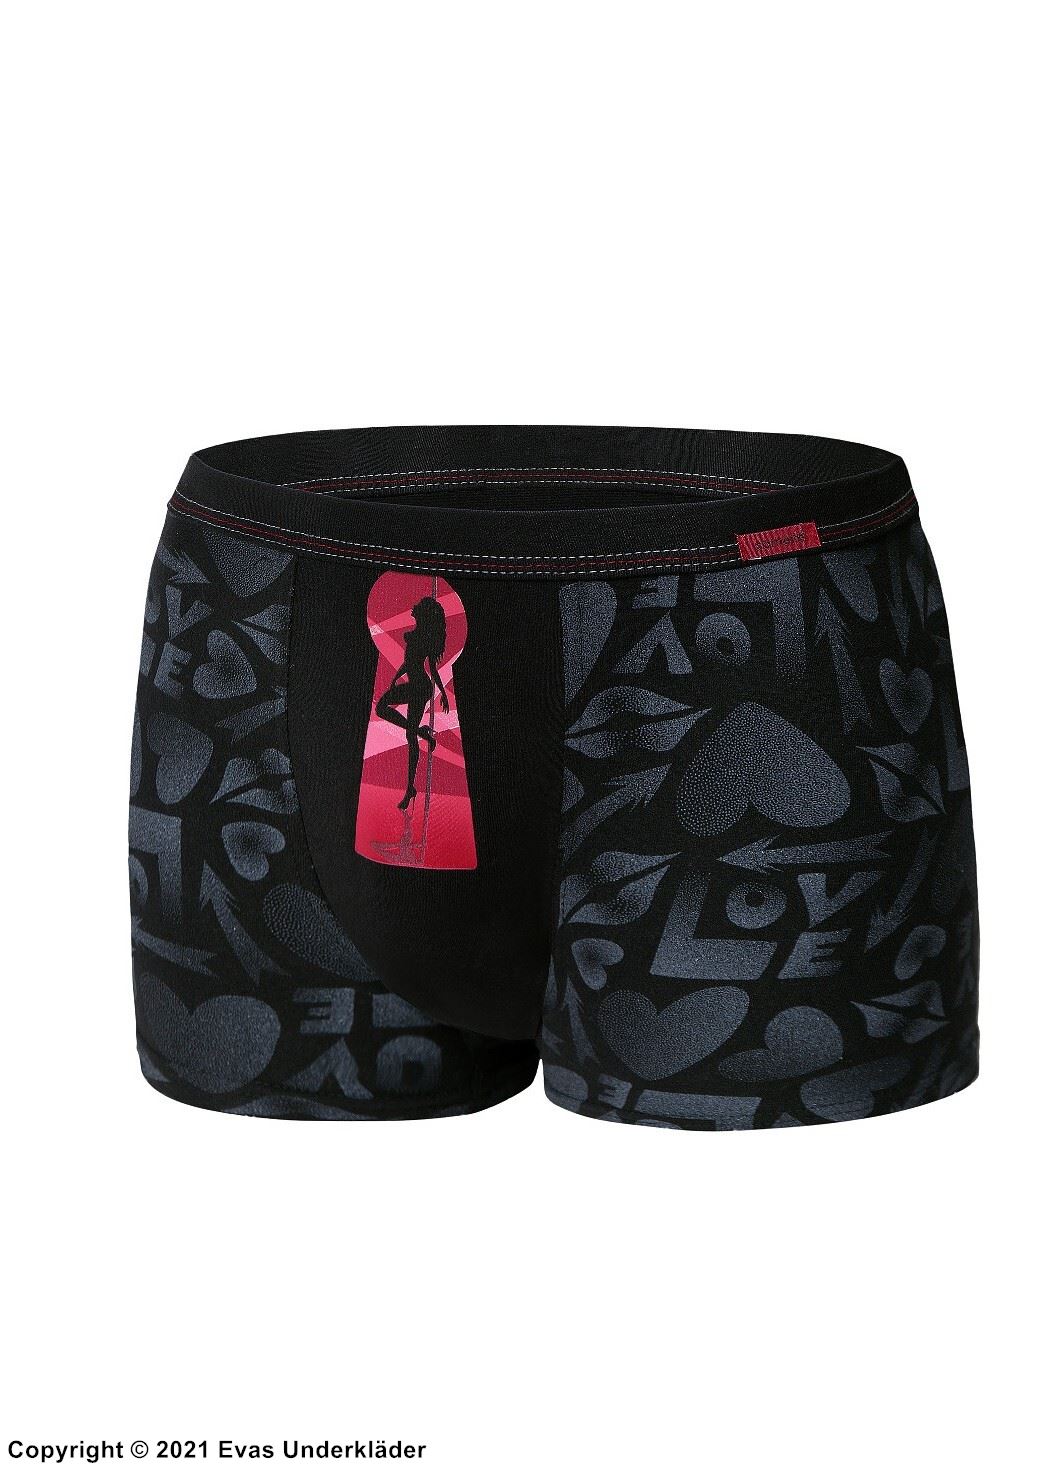 Men's boxer shorts, high quality, hearts, lips (pattern)